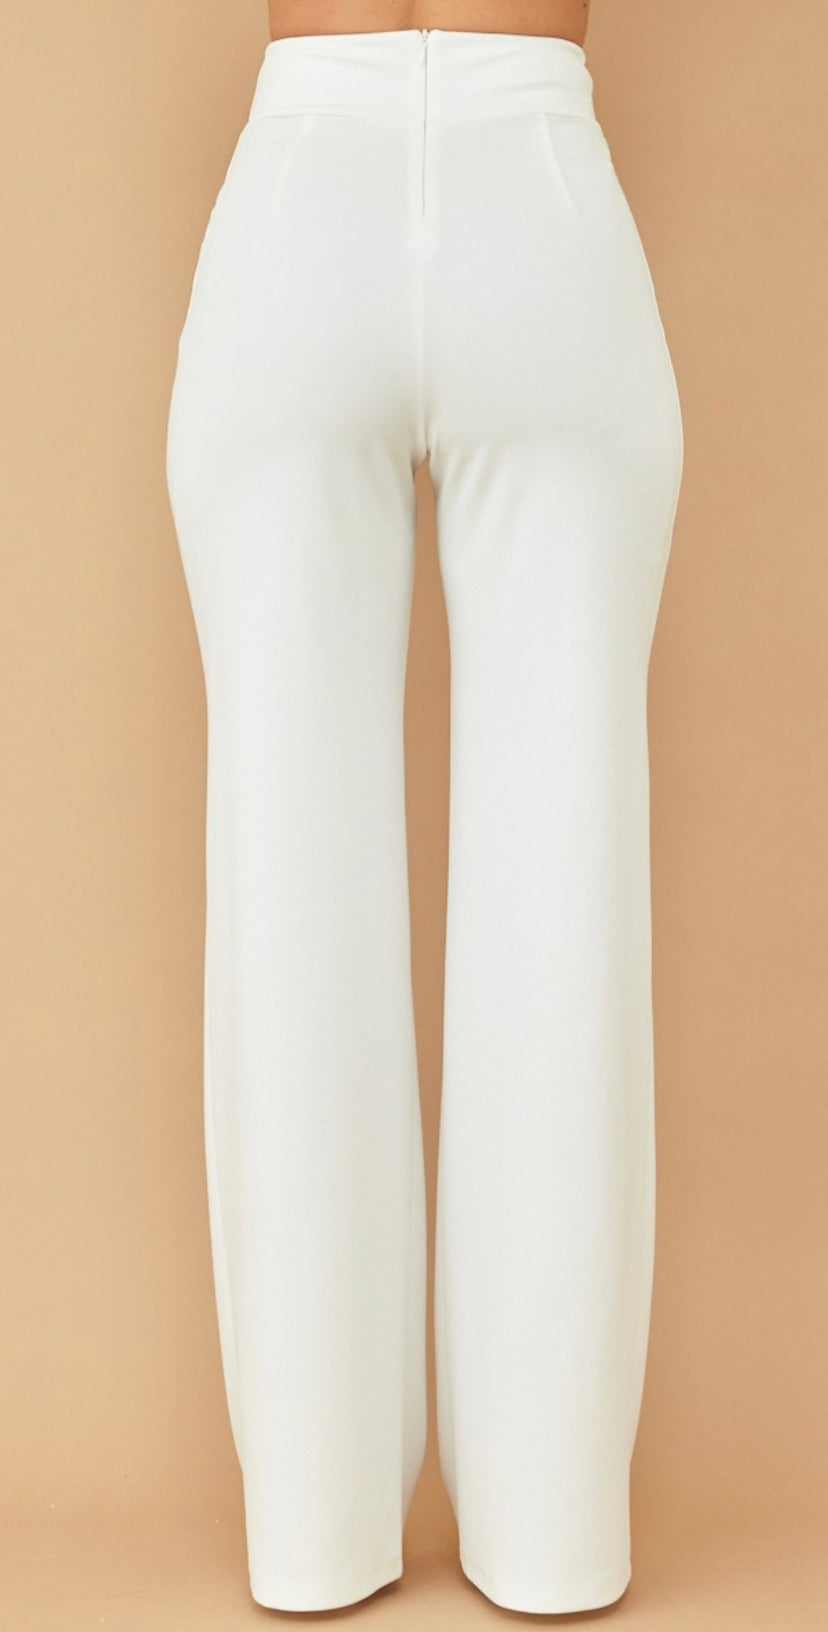 BUCKLE DETAIL HIGH WAIST PANTS- white.